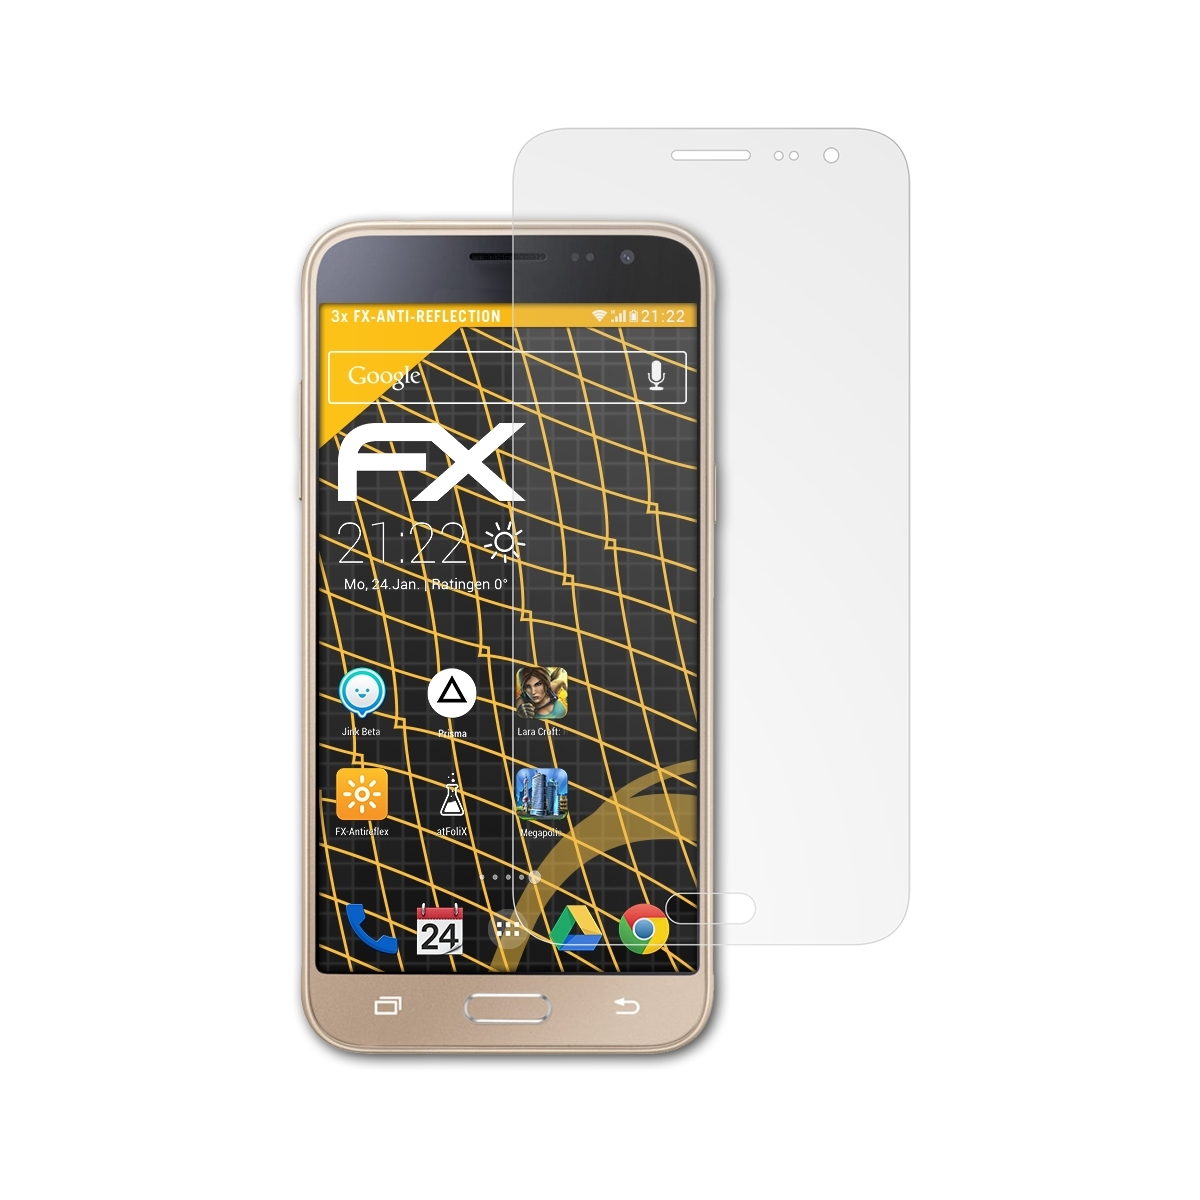 ATFOLIX 3x FX-Antireflex Displayschutz(für (SM-J320)) Galaxy J3 Samsung Pro